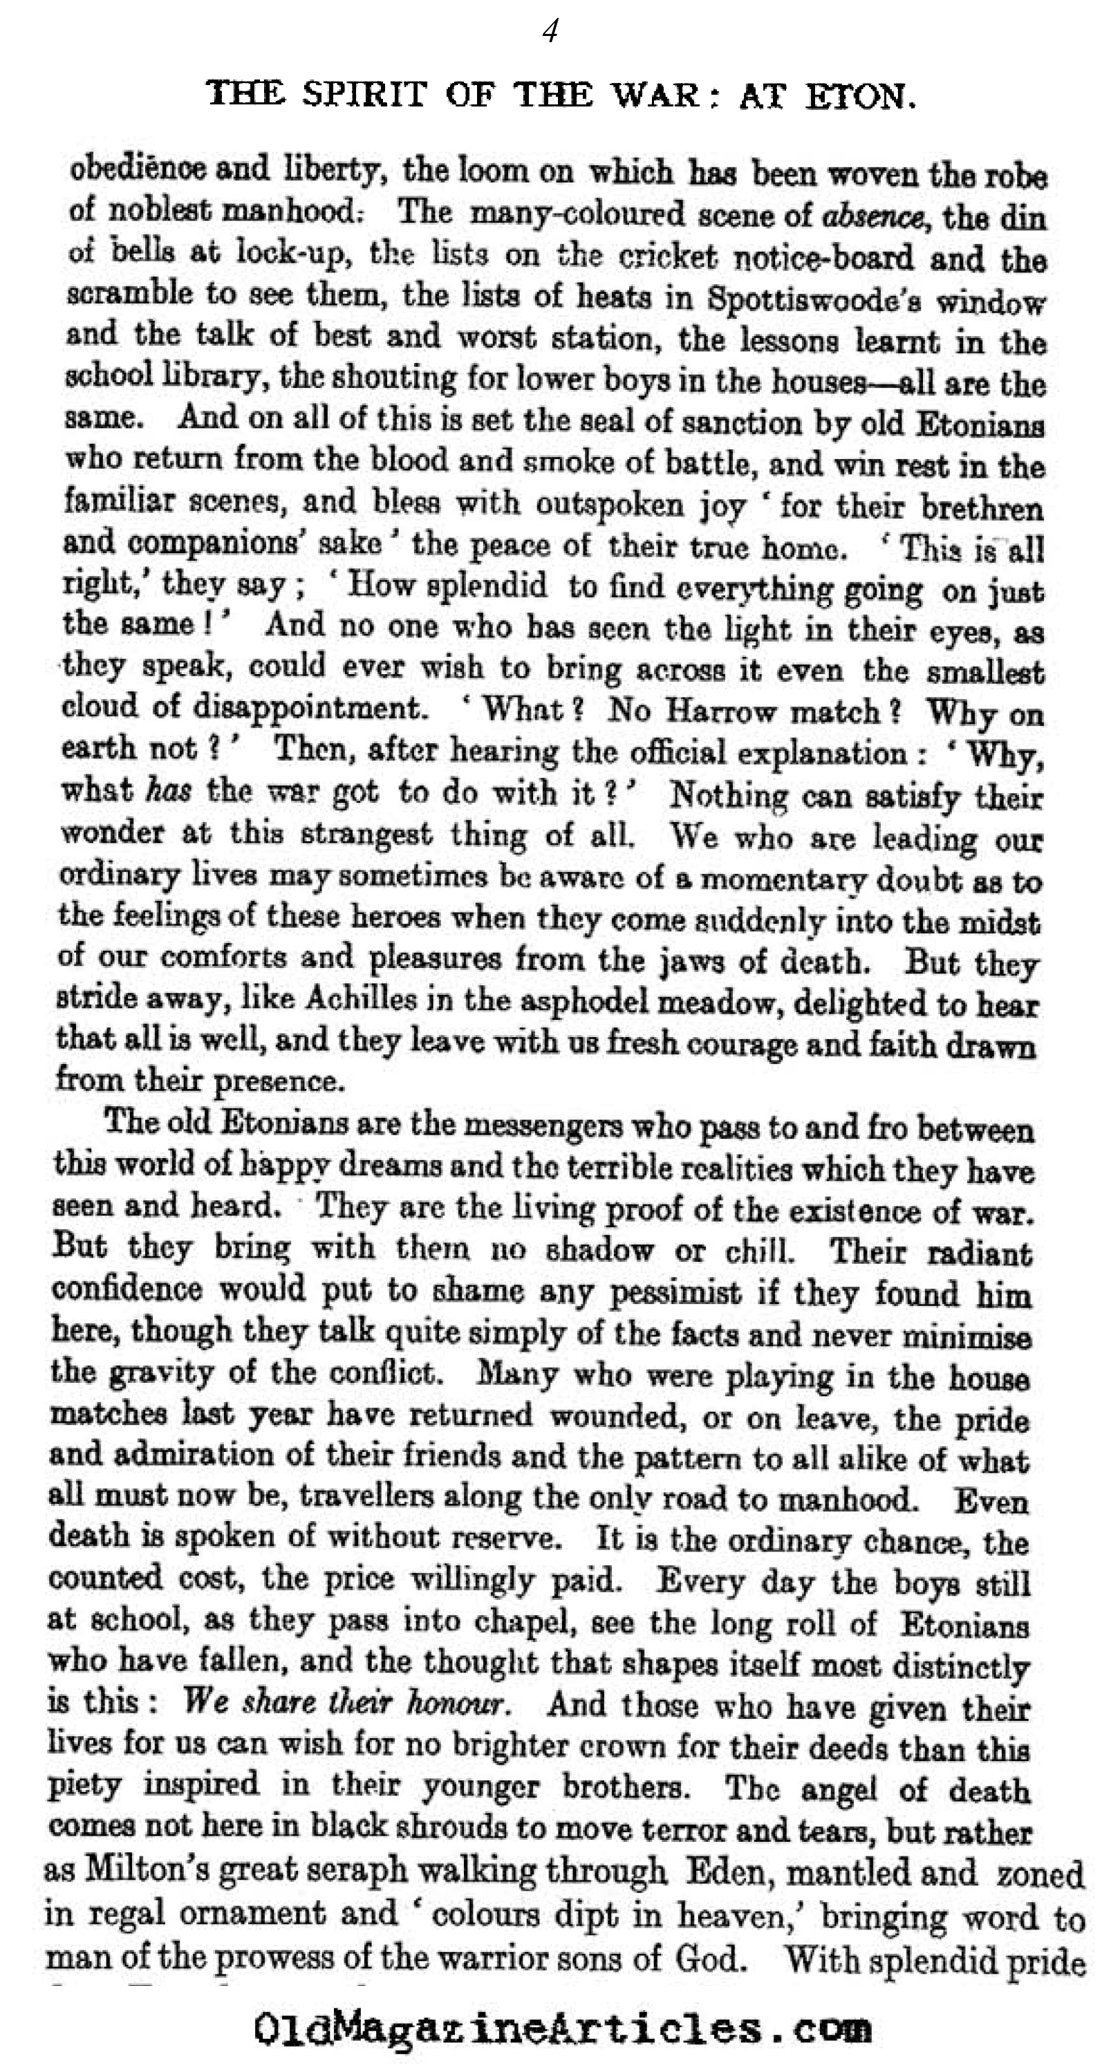 The Spirit of the War at Eton (Cornhill Magazine, 1918)